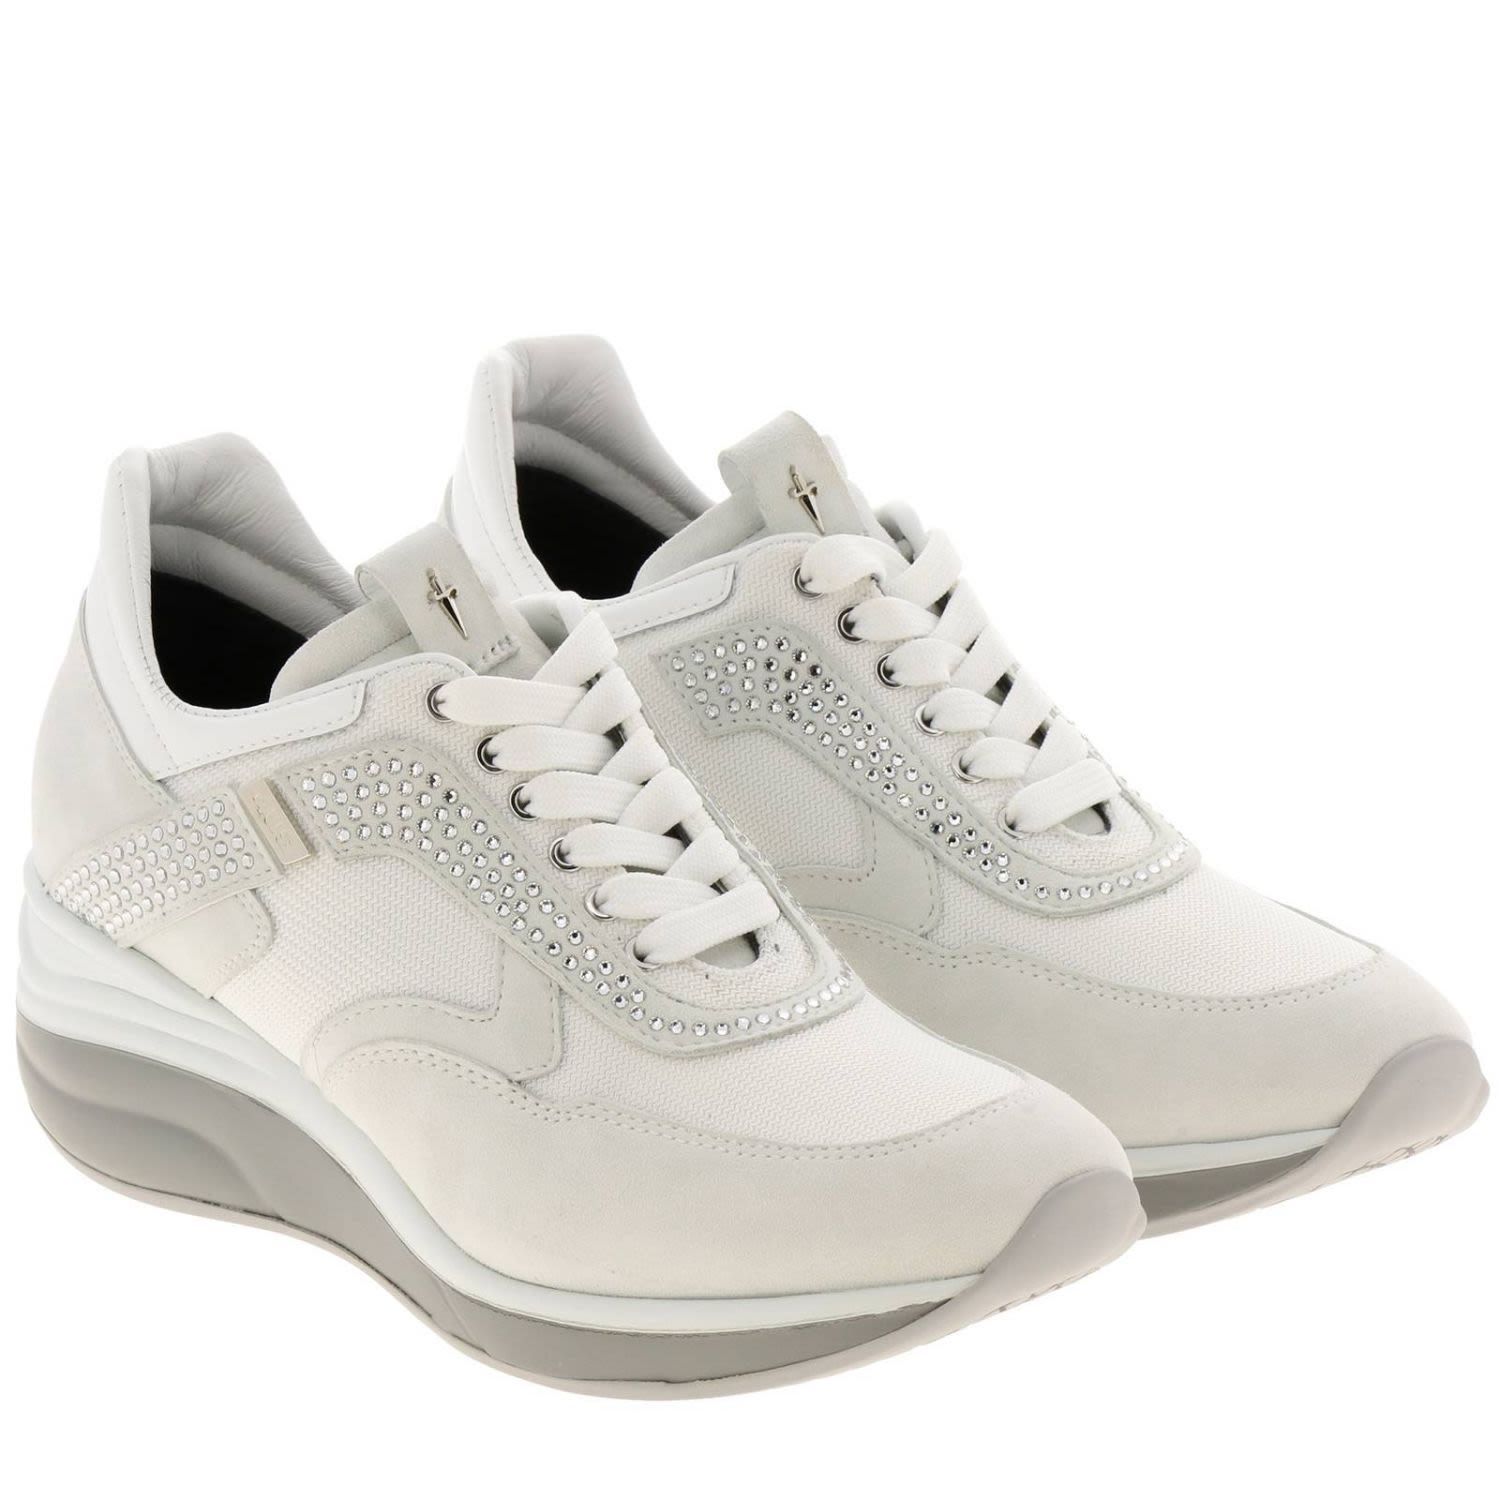 Paciotti 4US Paciotti 4us Sneakers Shoes Women Paciotti 4us - white ...